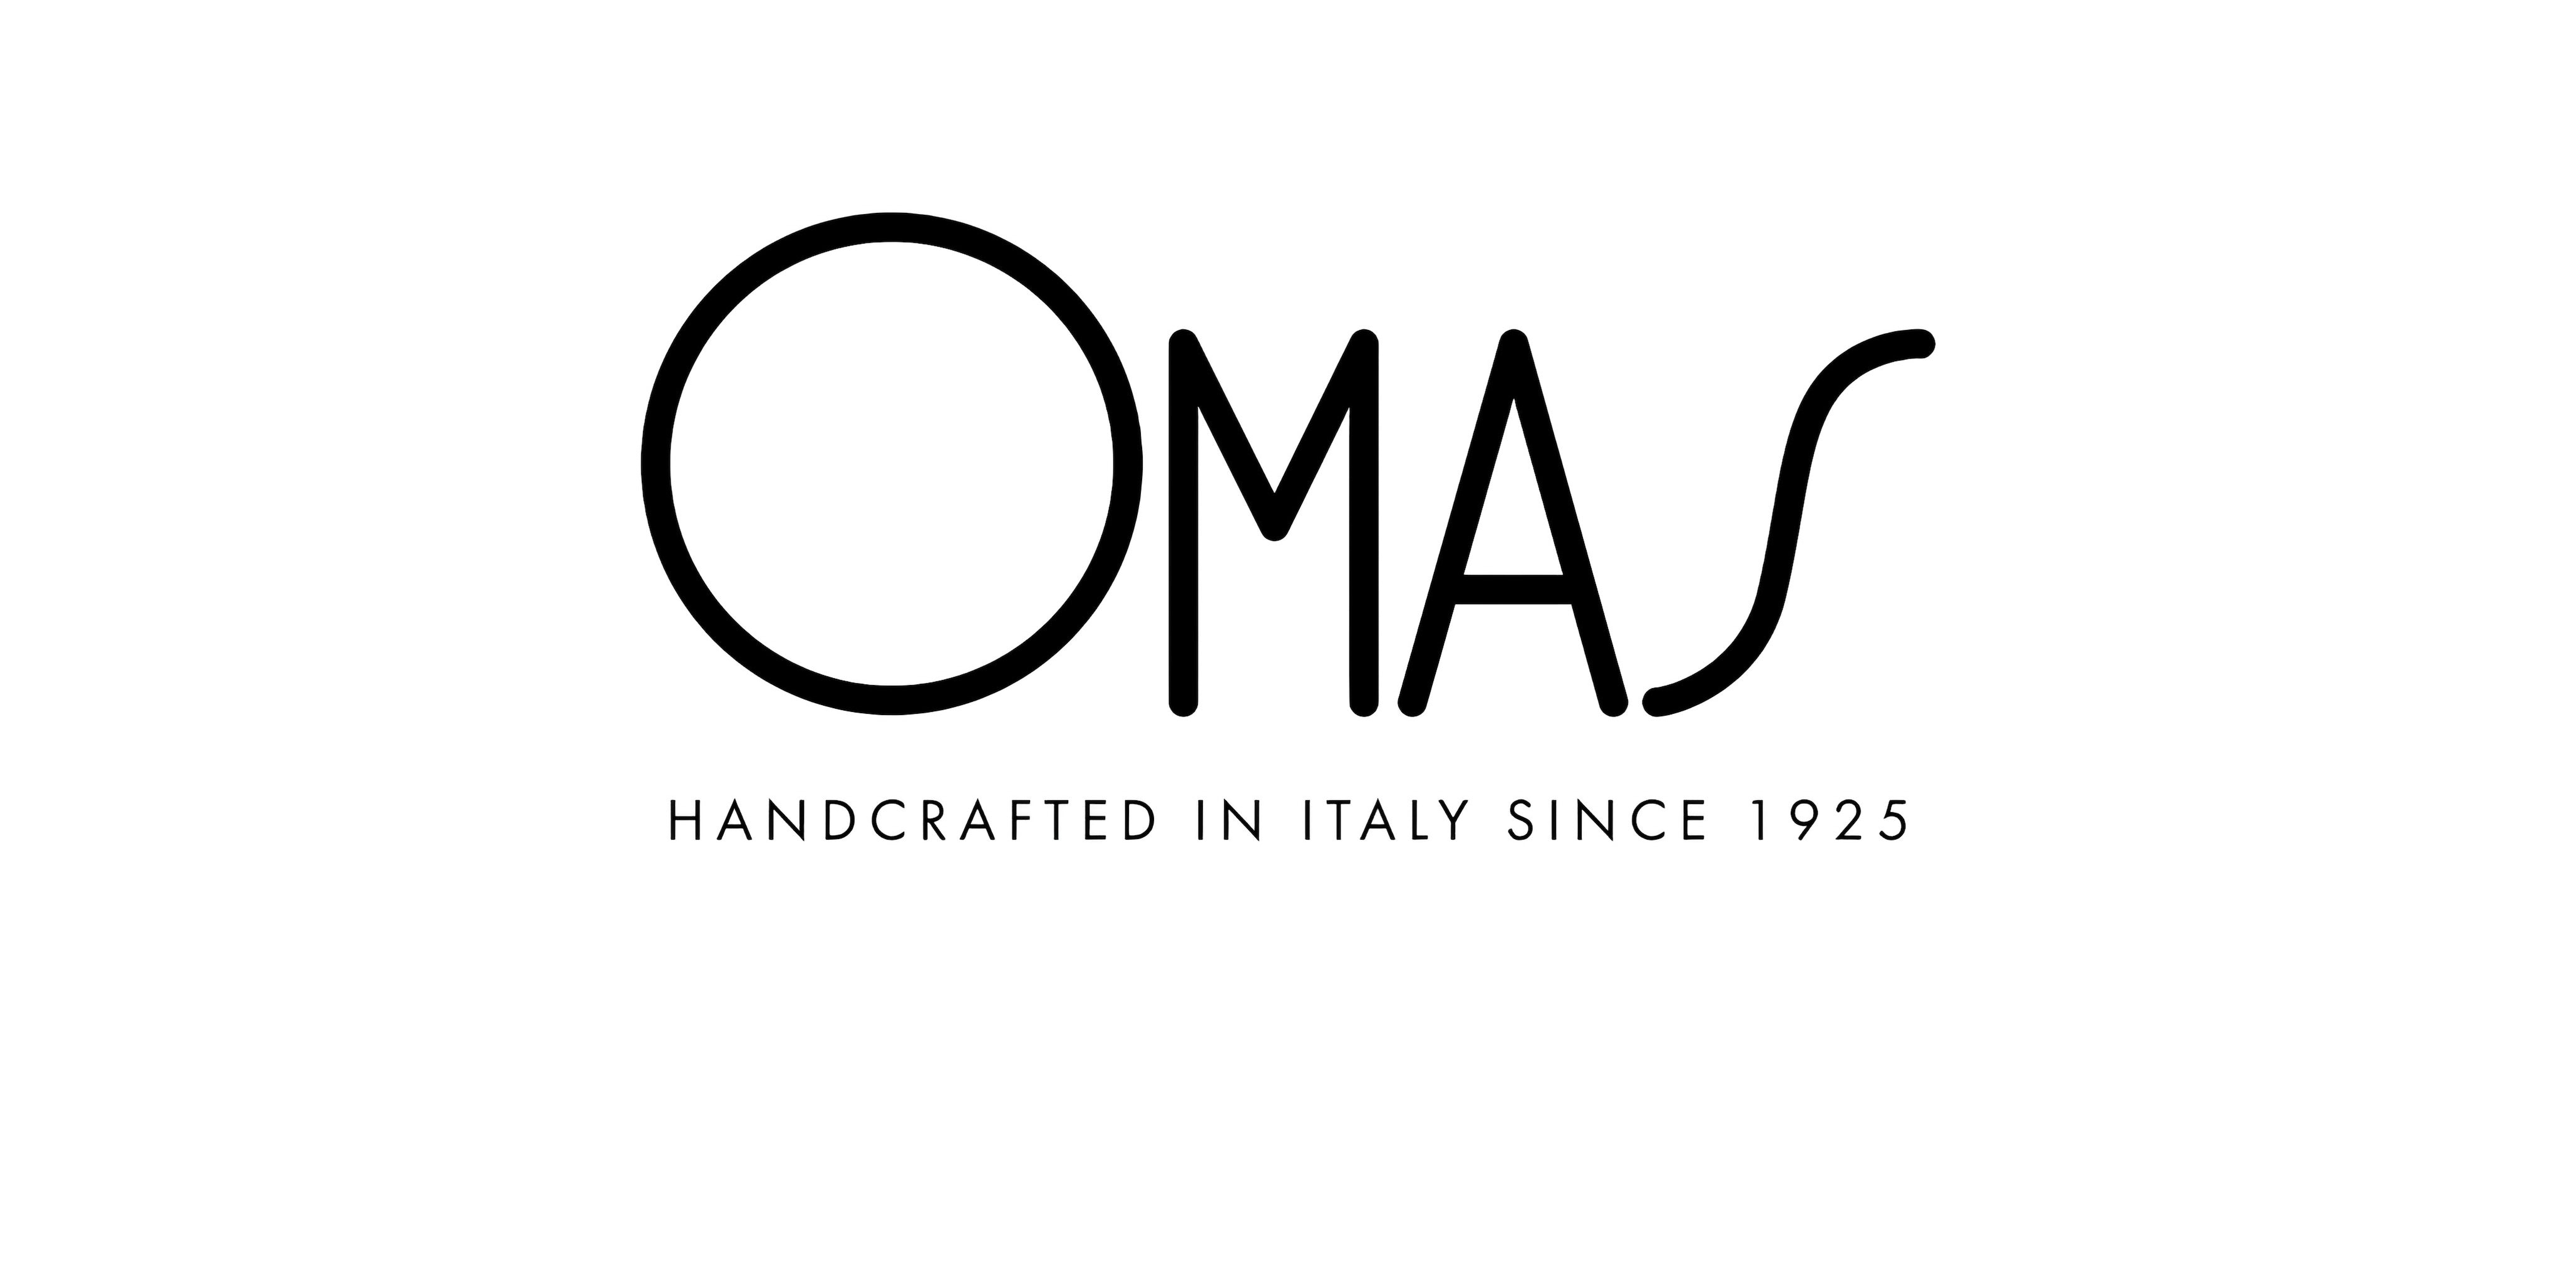 Ancora Acquires Omas: A Milestone in Italian Penmaking